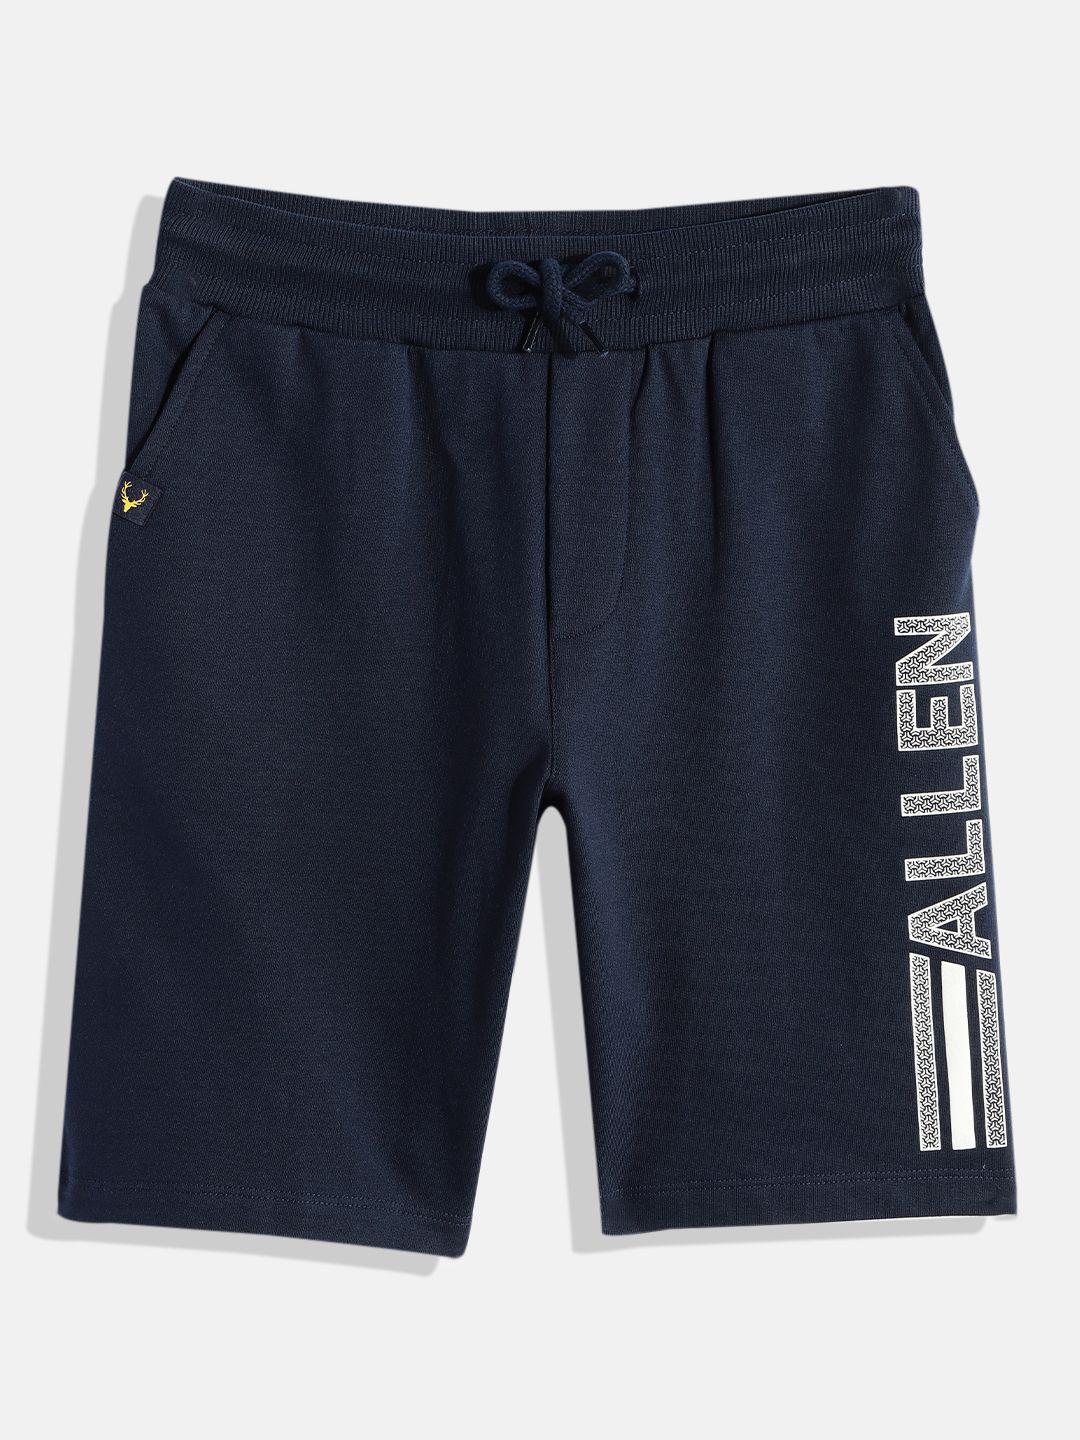 allen solly junior boys navy blue typography pure cotton regular fit shorts